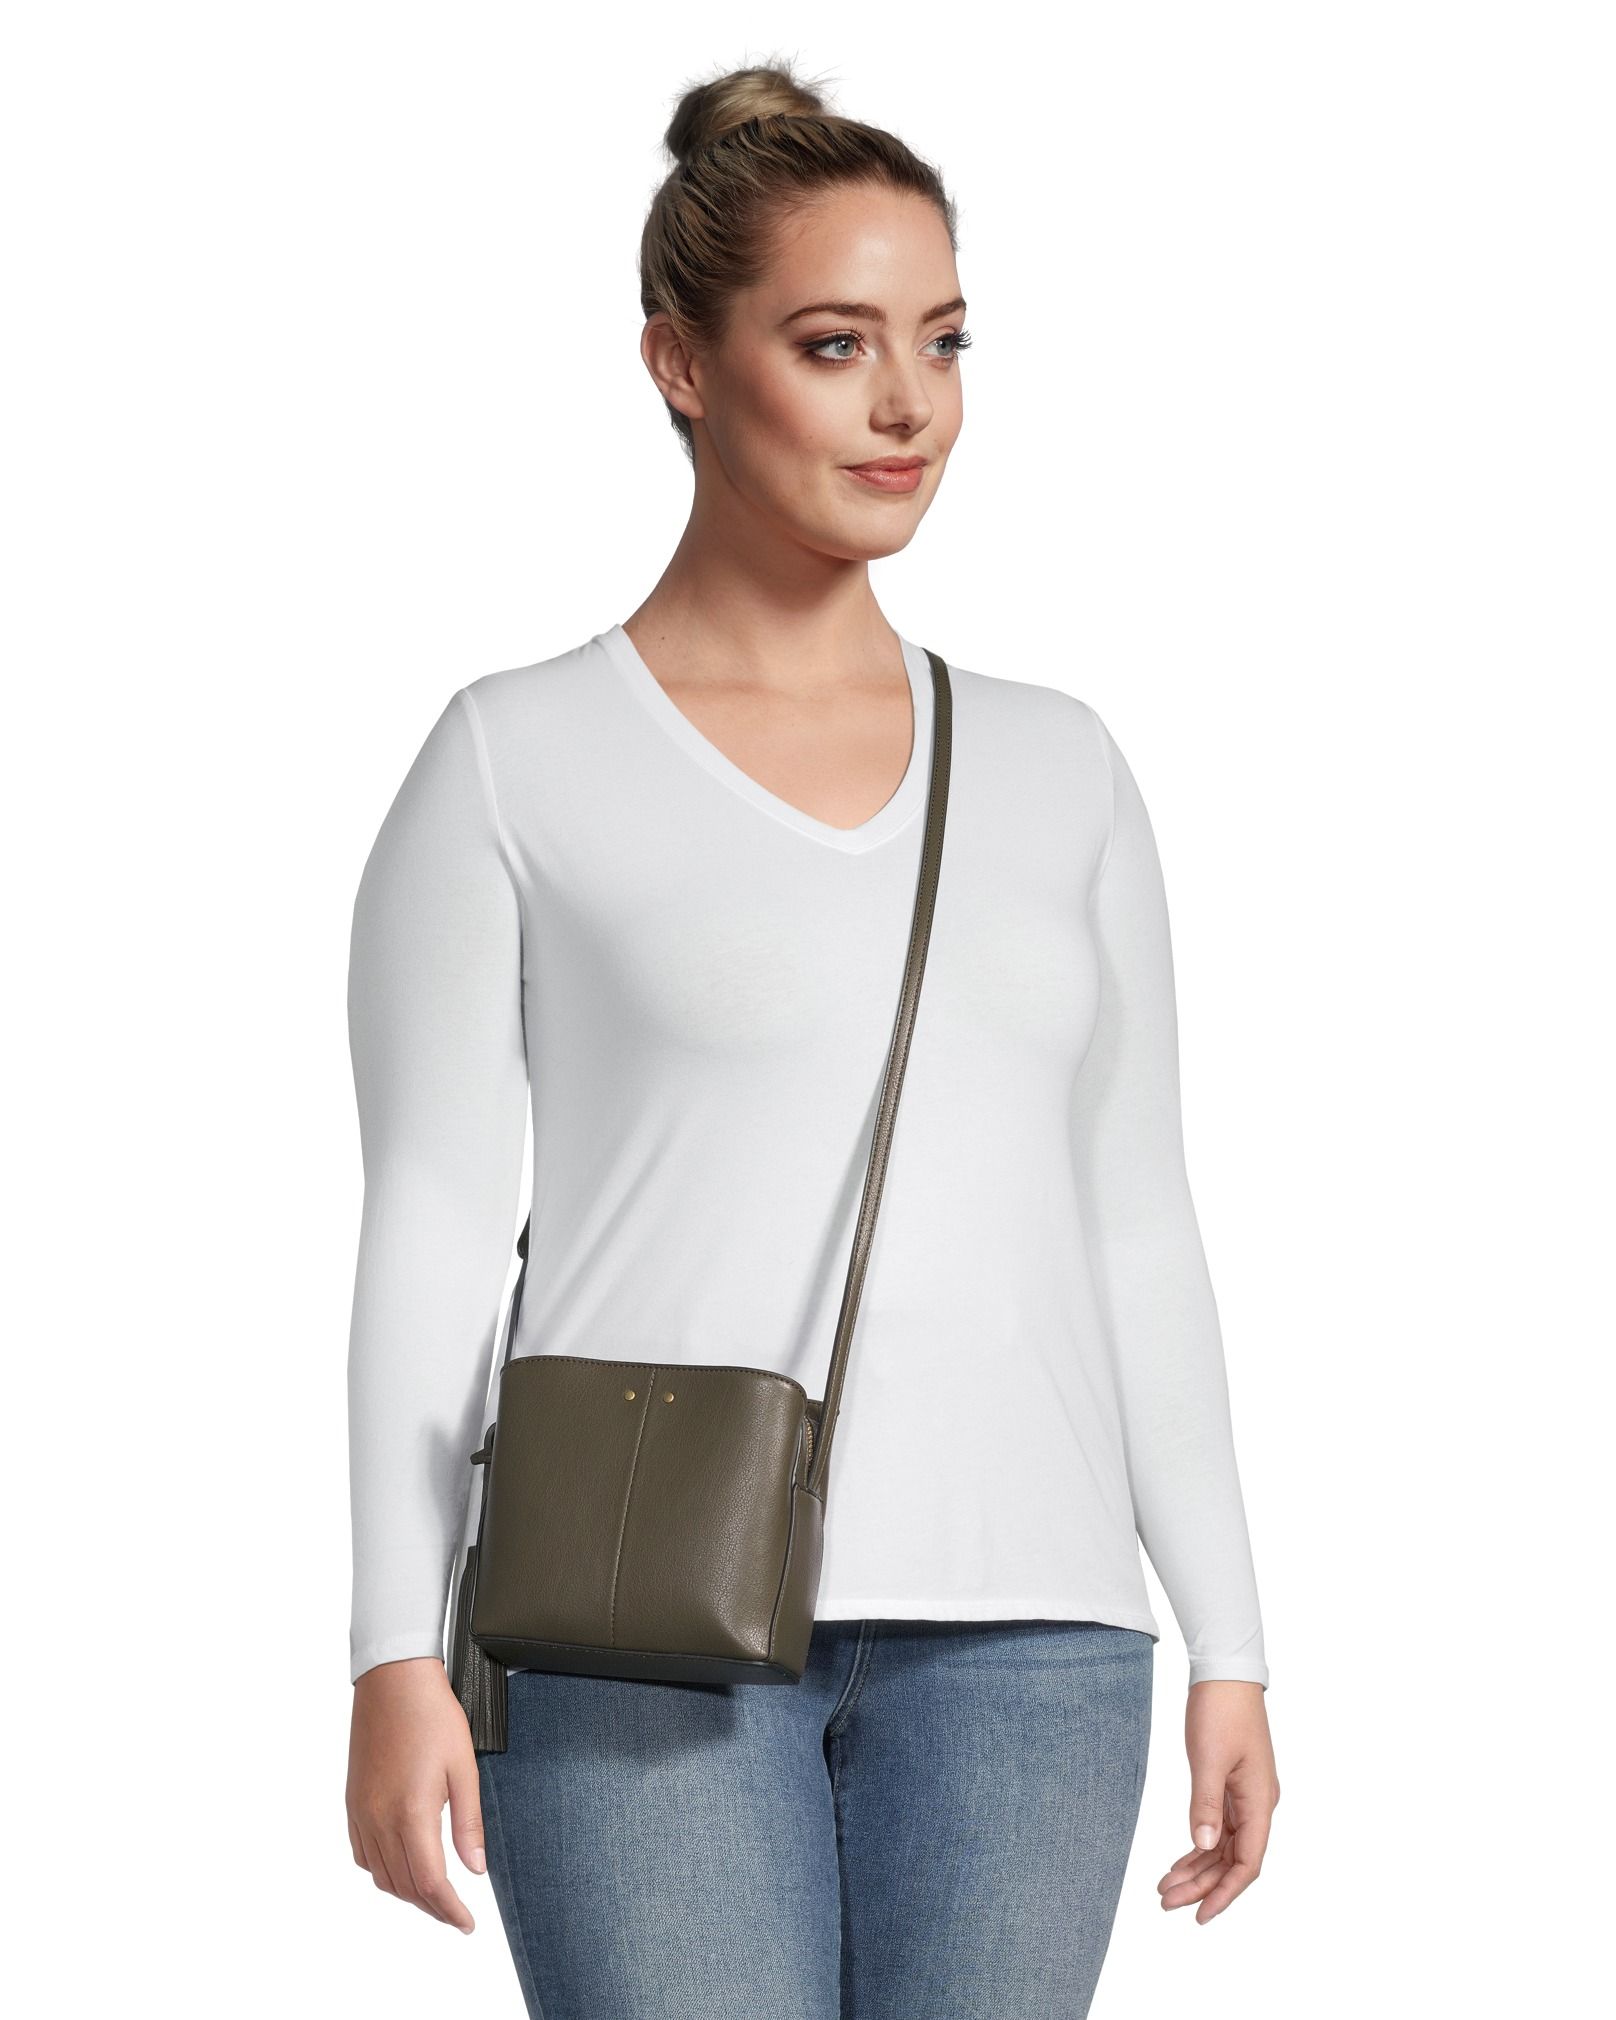 Buy EKYLIP Leather Purse - Top Handles Women Handbag - Medium Faux Leather  Shoulder Tote - Multi-Compartment Crossbody Bag (BLACK) at Amazon.in